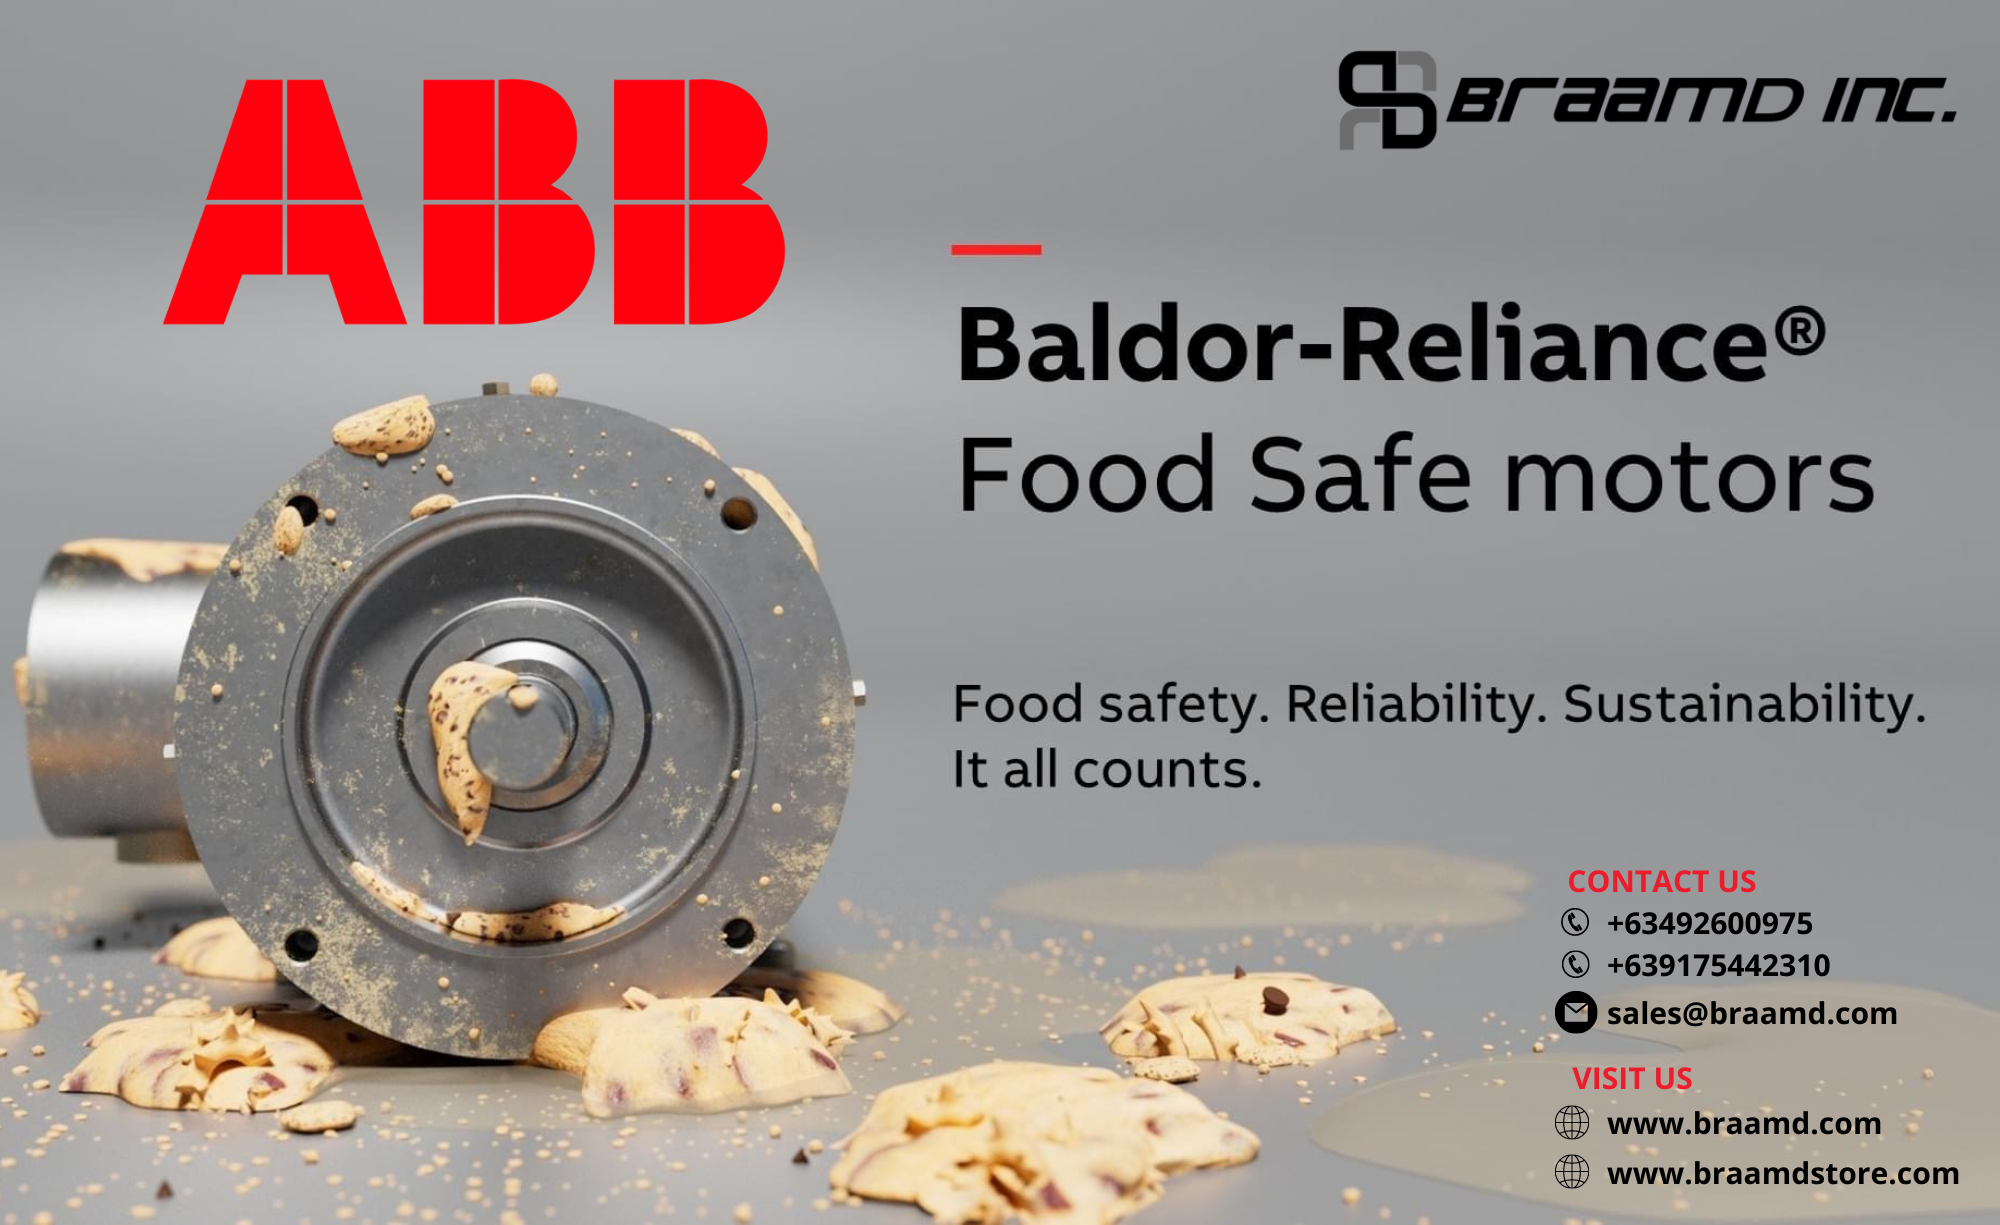 ABB's Baldor-Reliance Stainless Steel Motors